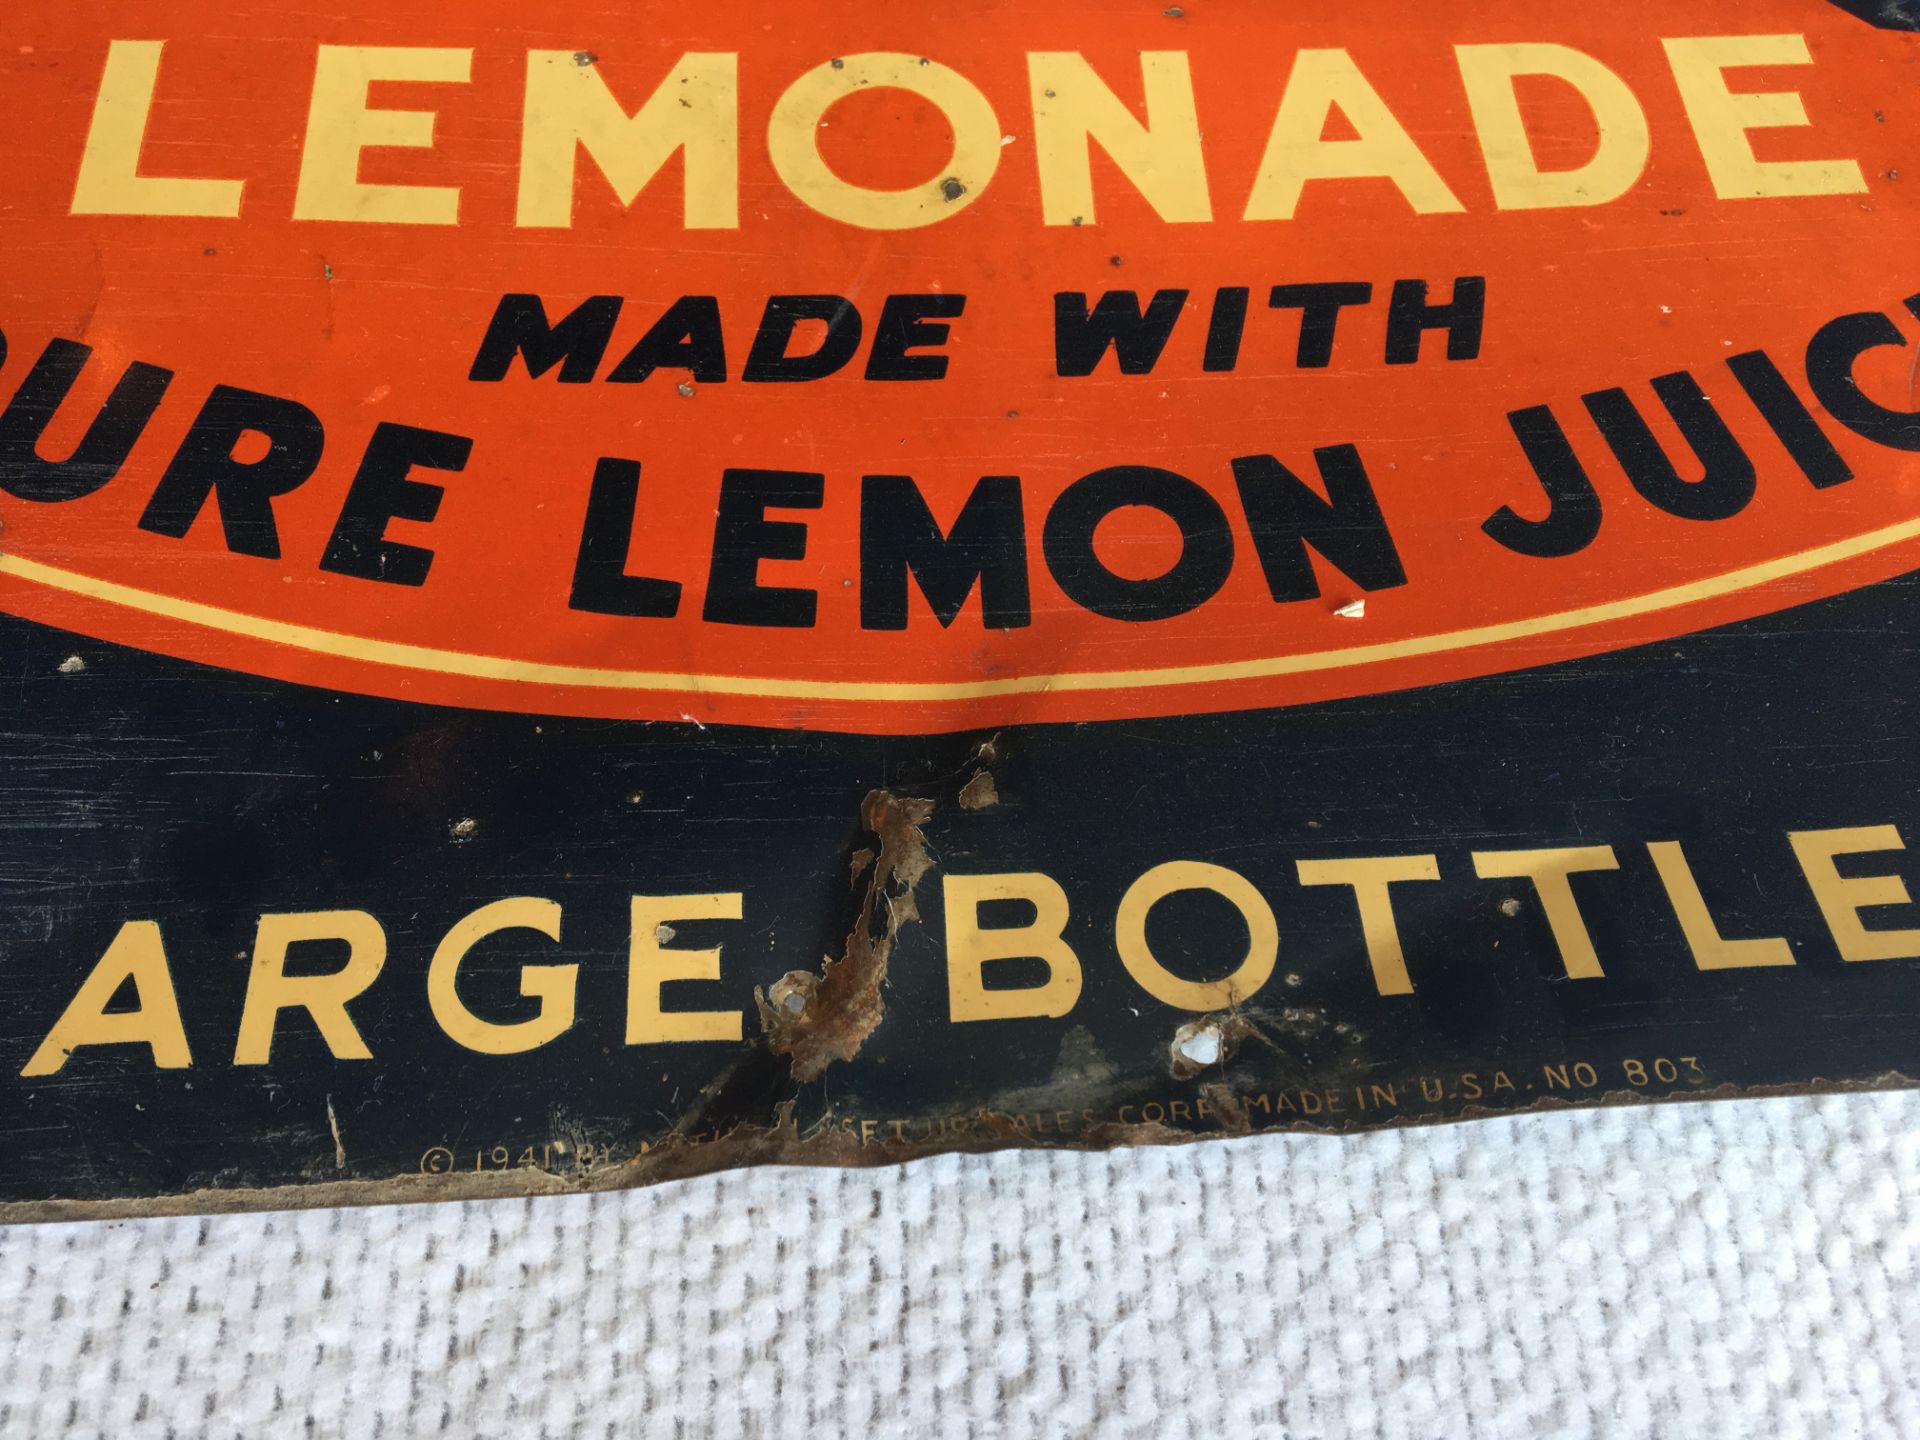 Sun Drop Lemonade, 23 ¼” x 17 ½”, Metal Sign (No. 803) - Image 2 of 2